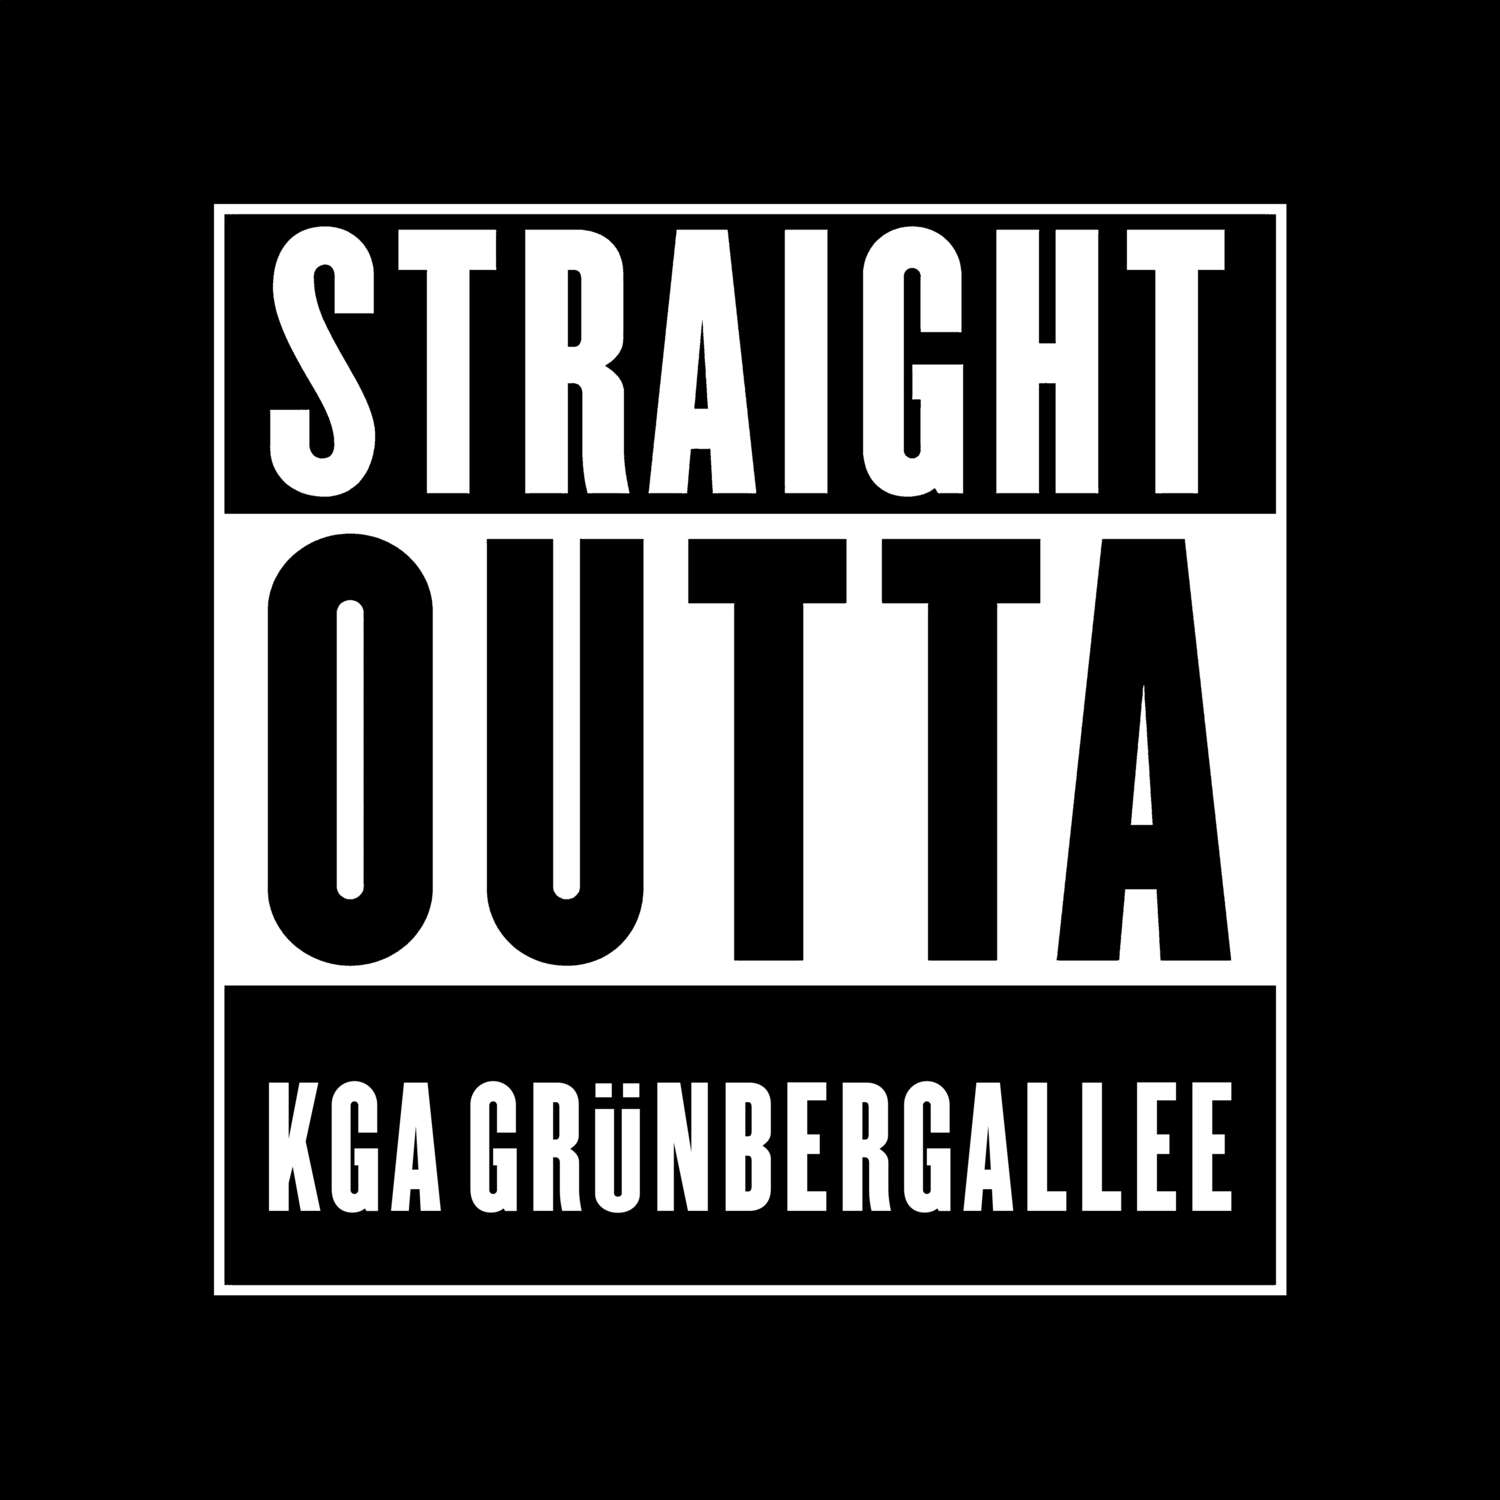 KGA Grünbergallee T-Shirt »Straight Outta«